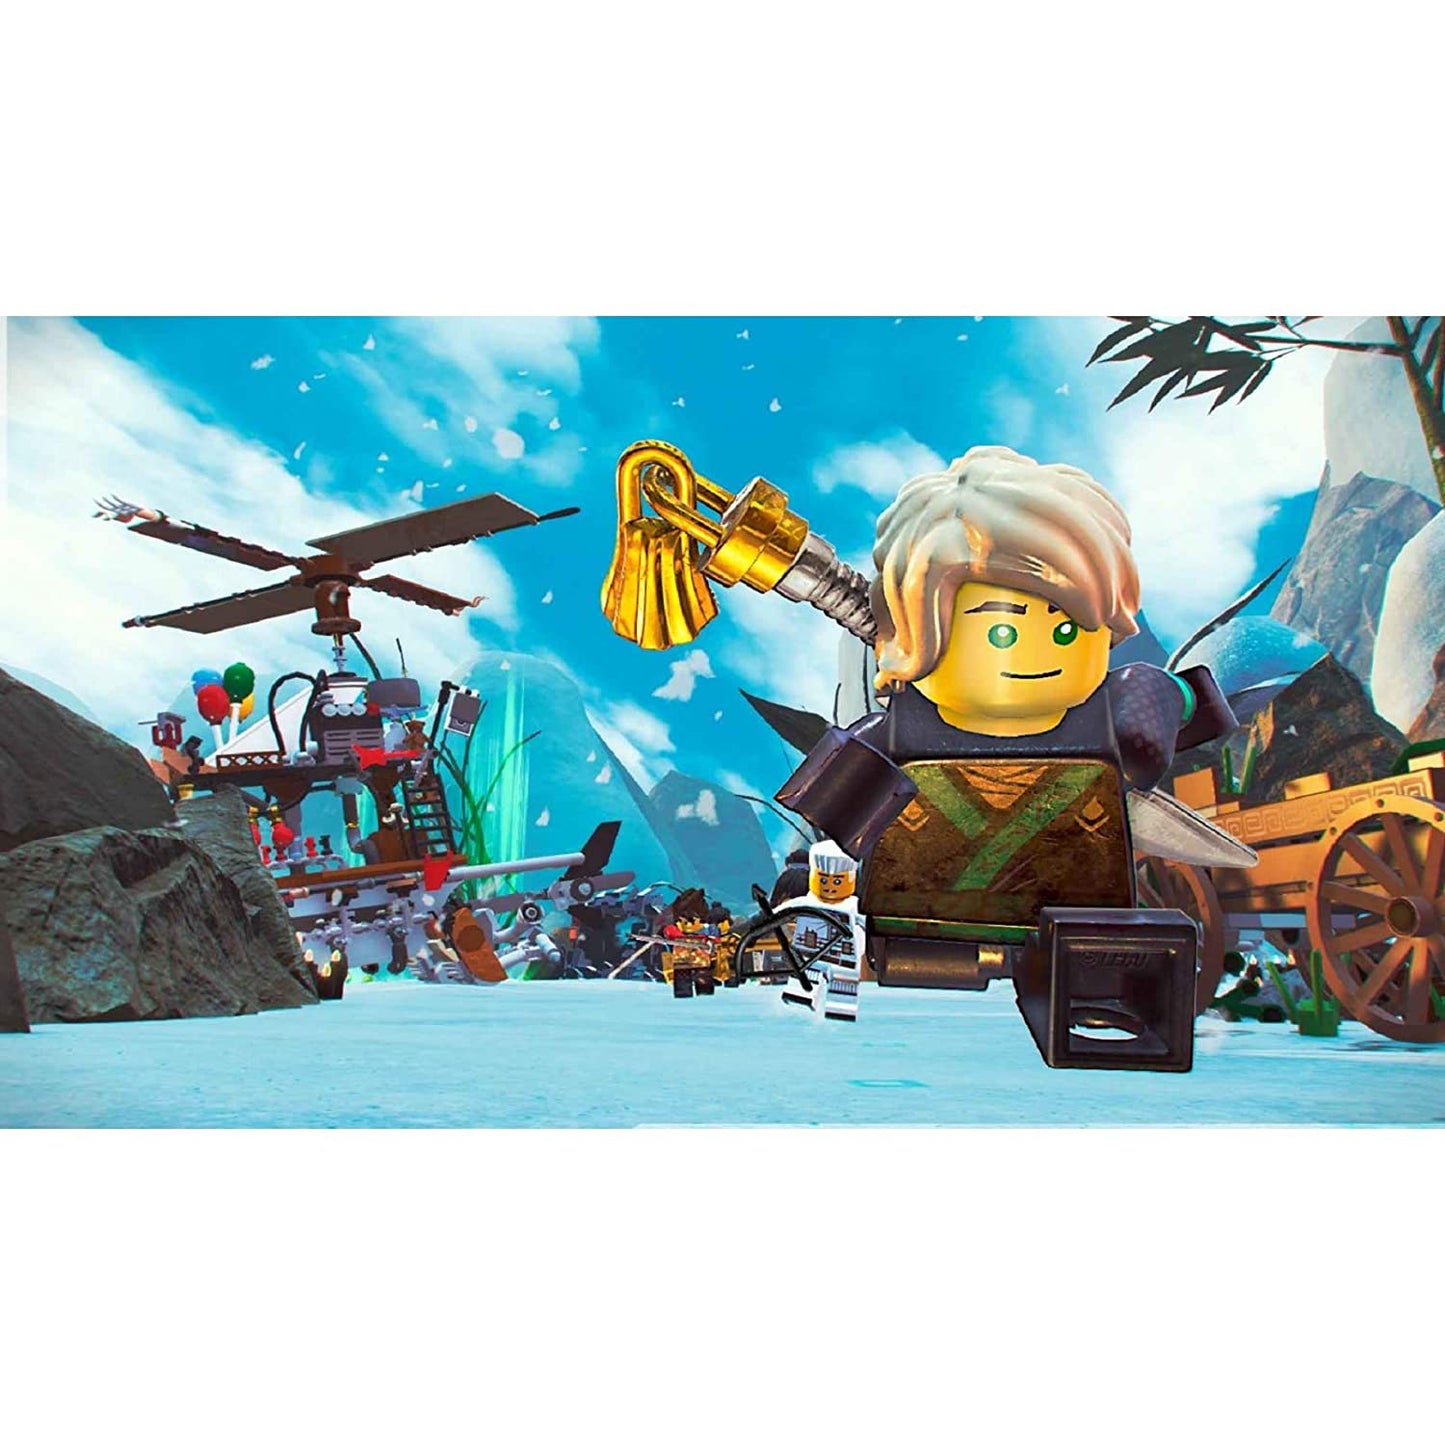 LEGO Ninjago Movie Game: Videogame - Nintendo Switch